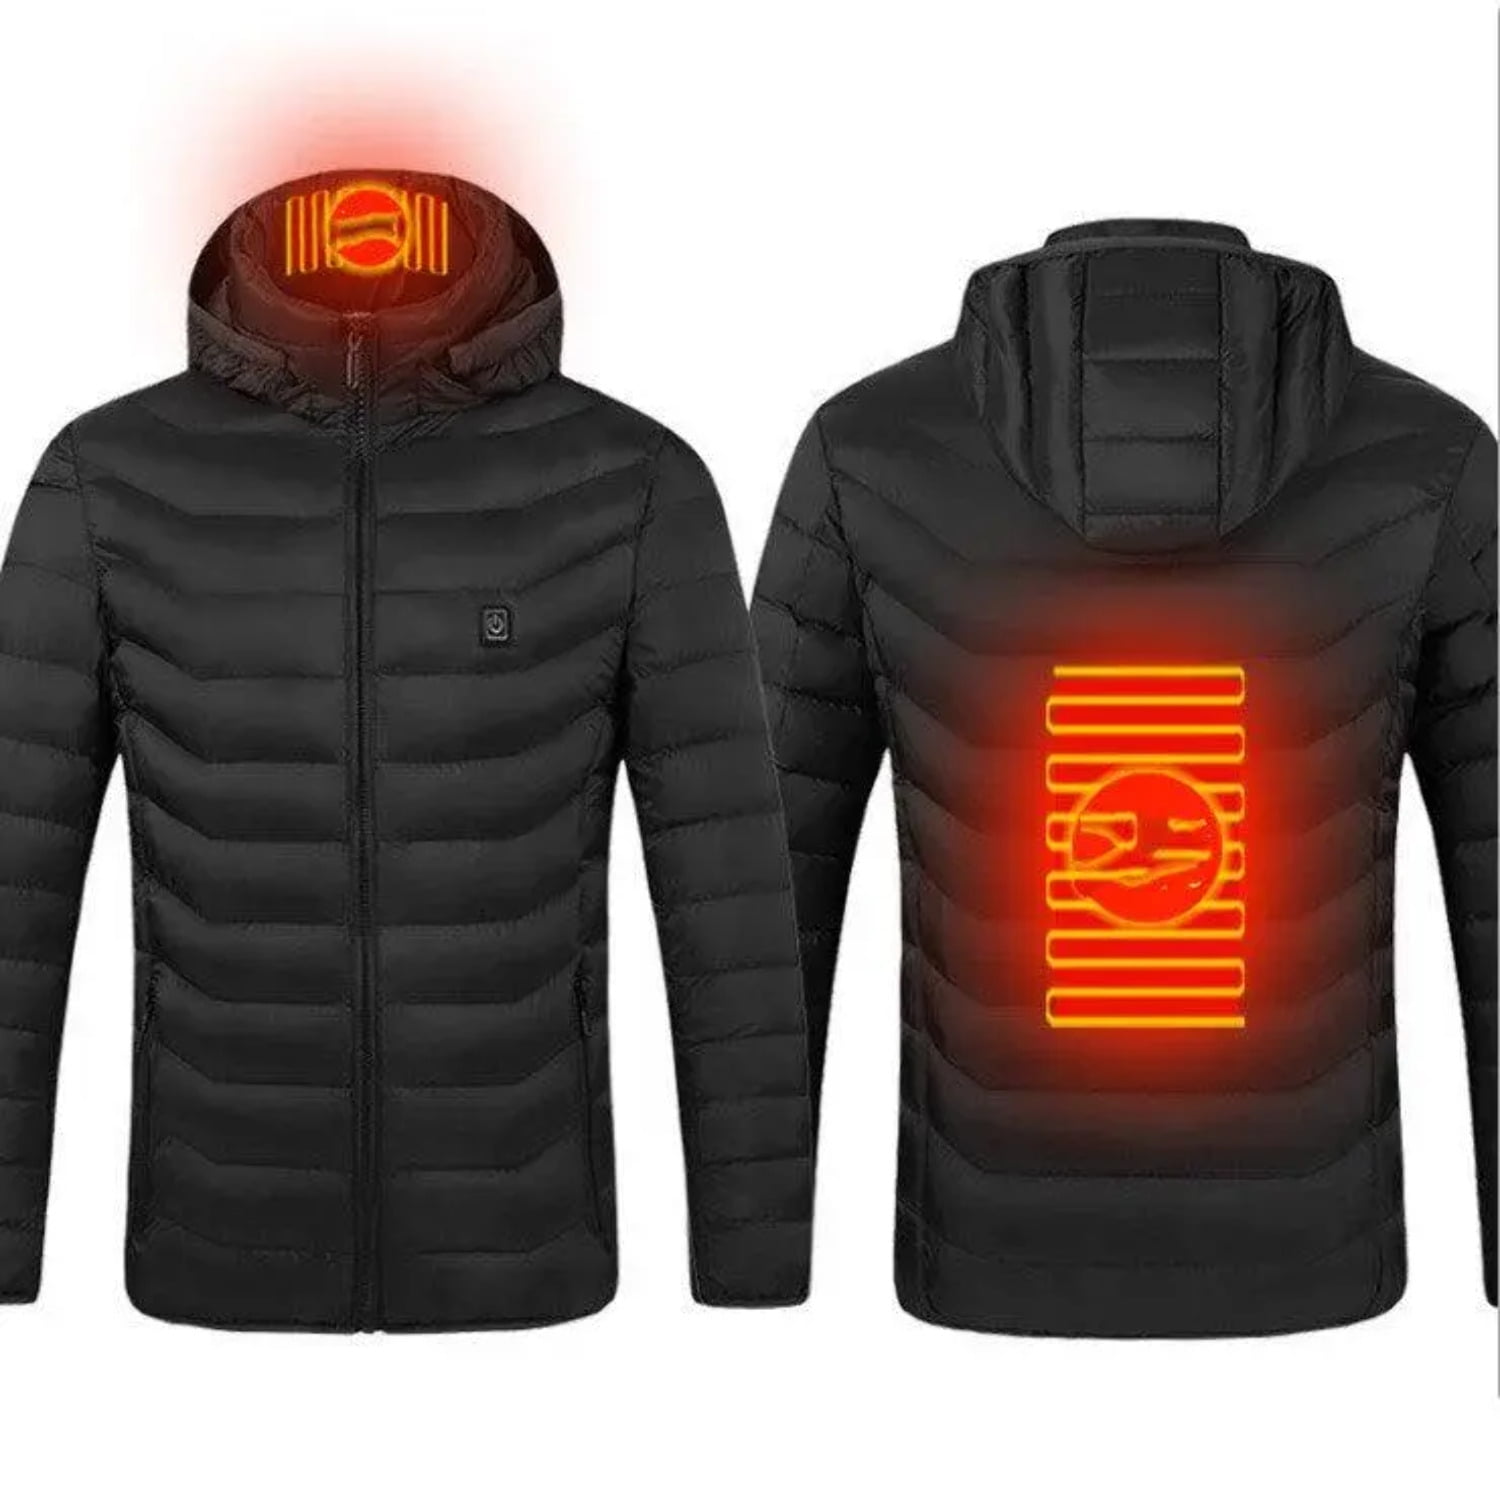 New Heated Jacket Coat USB Electric Jacket Cotton Coat Heater Thermal ...